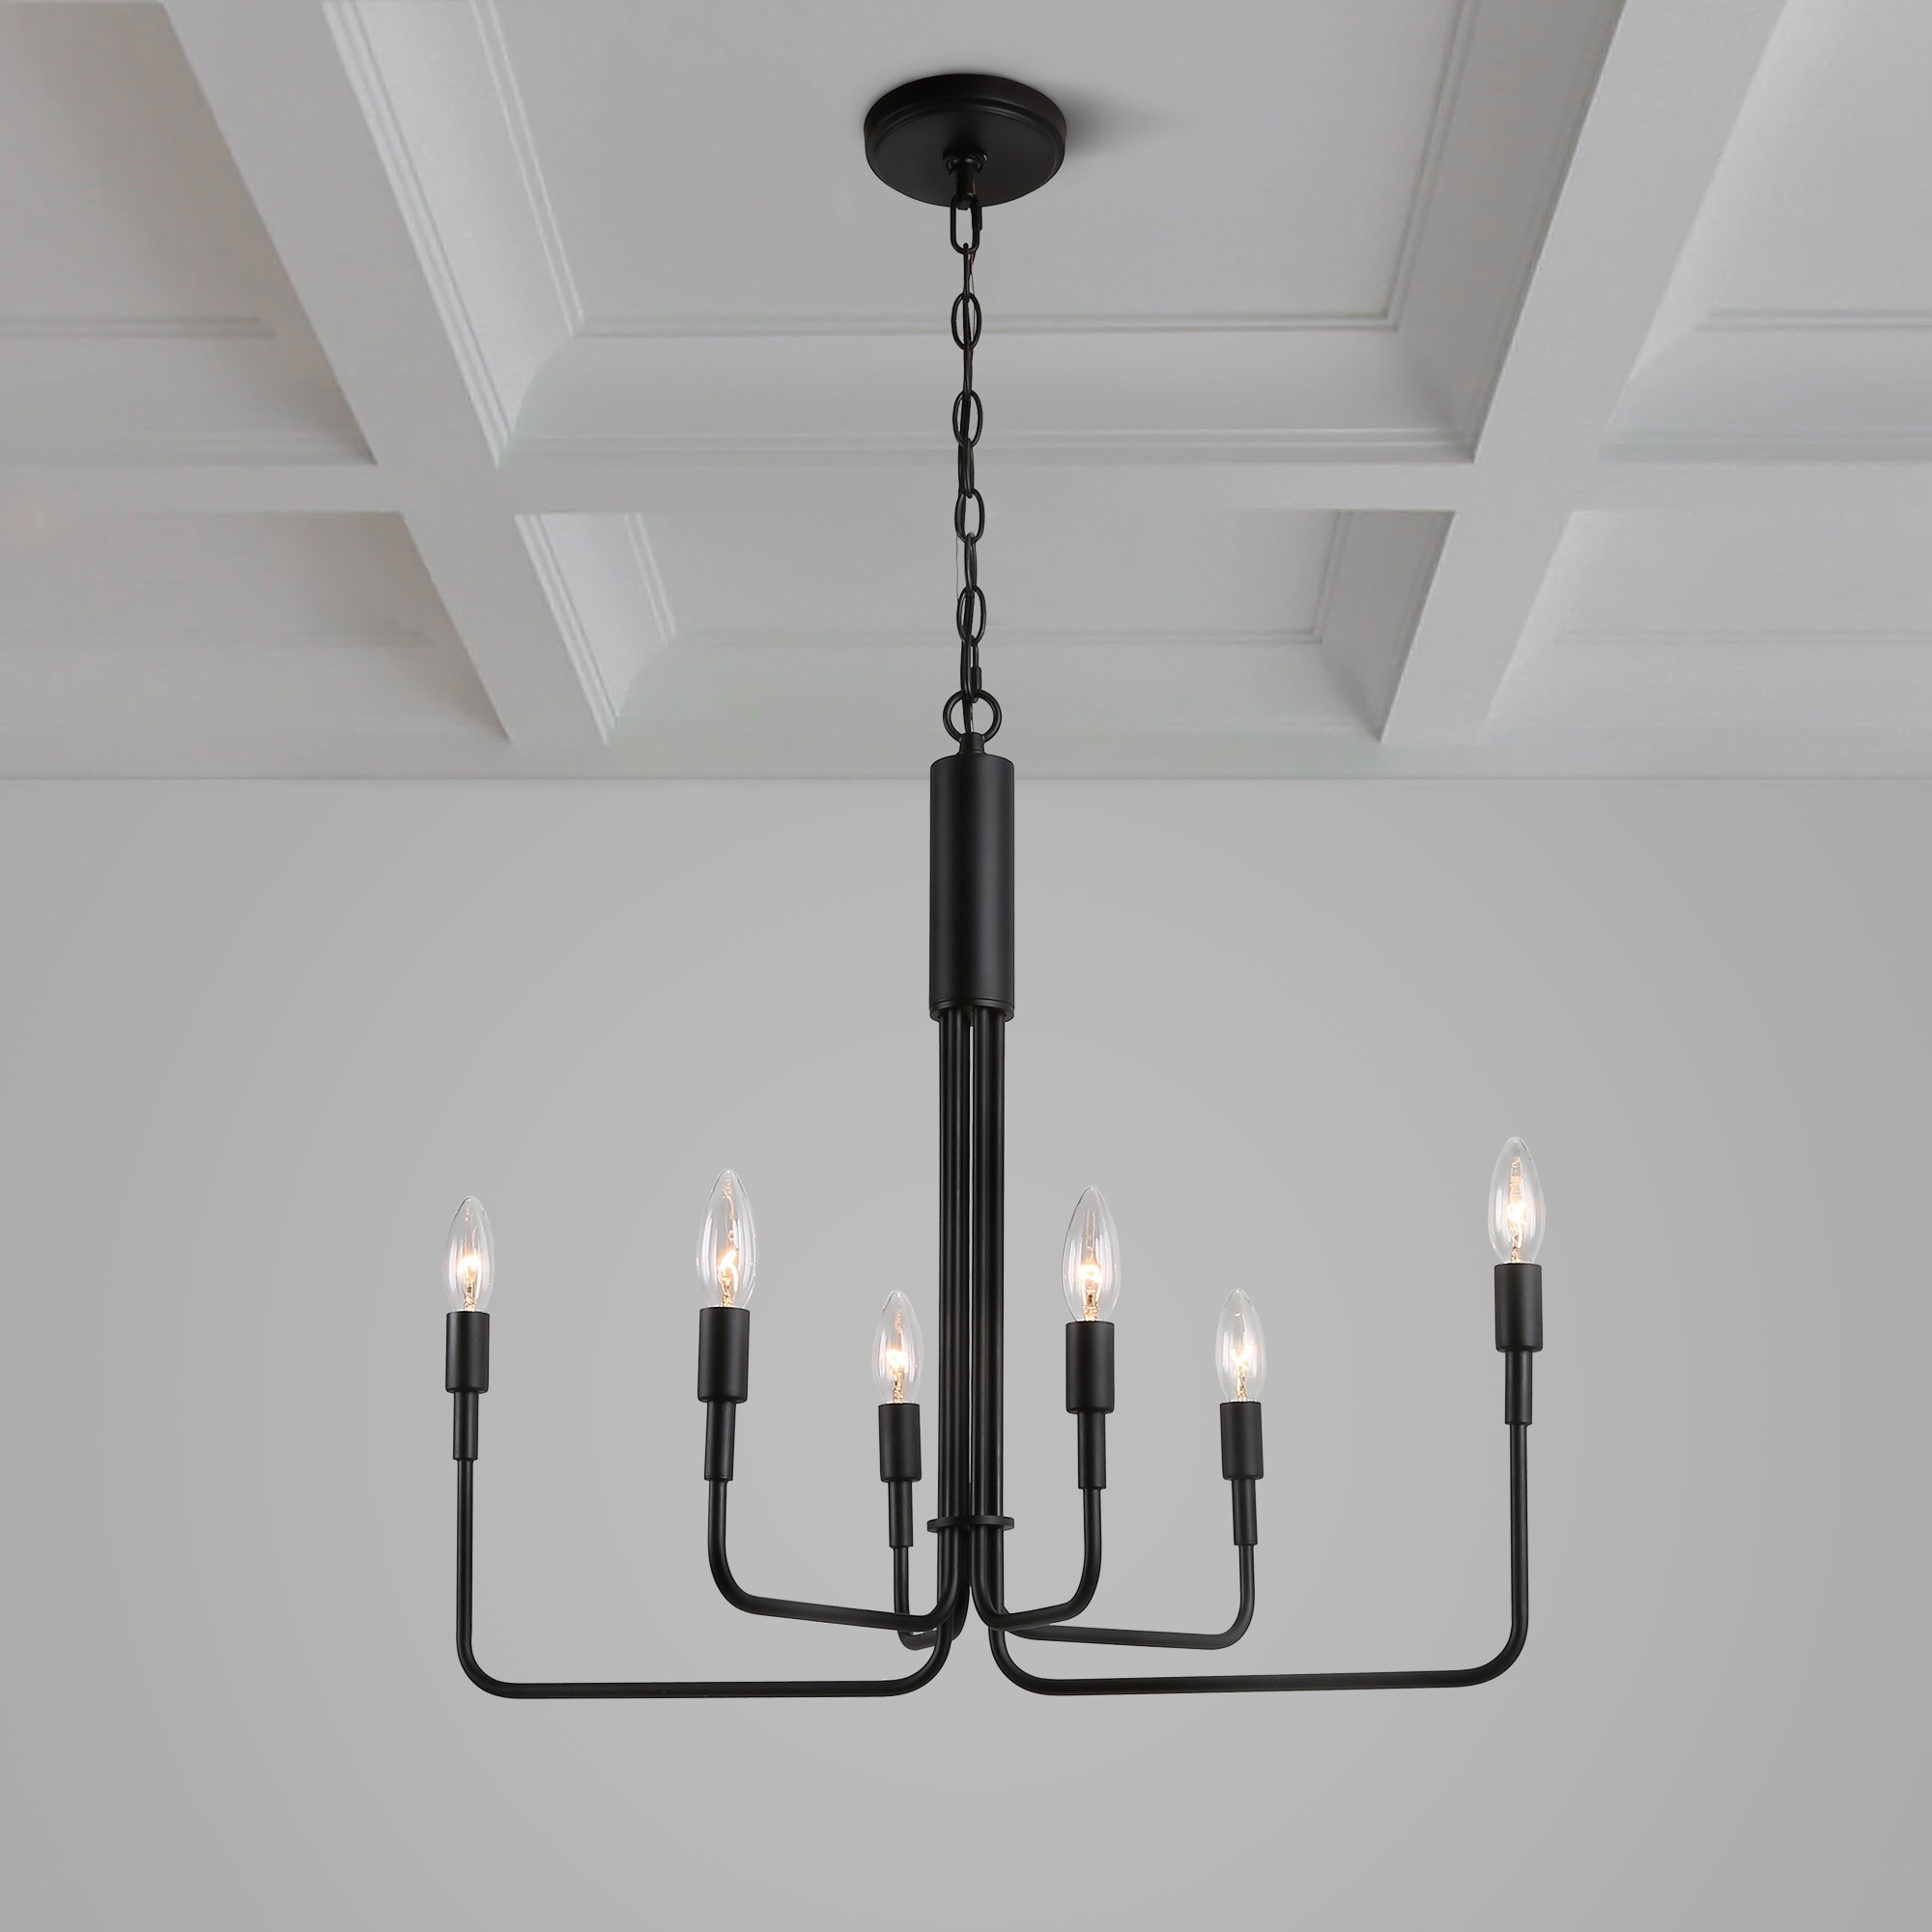 Modern black chandelier, Contemporary design, Echo collection, Statement lighting, 2000x2000 HD Handy